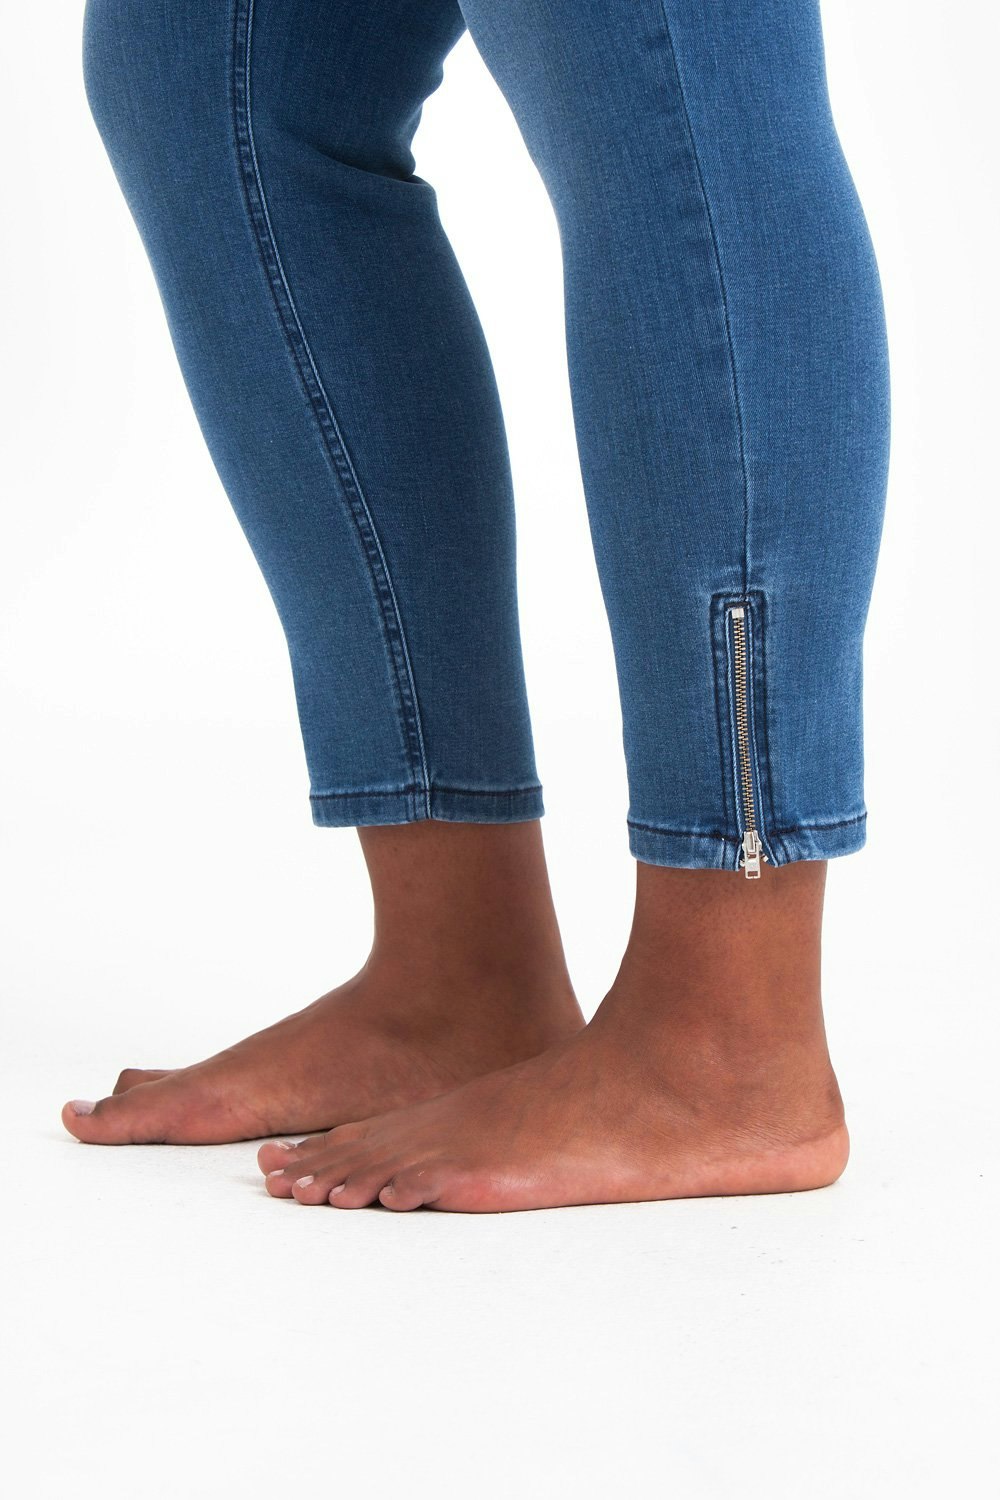 Blåa Power Zip Jeans i stora storlekar, dragkedja i benslutet.